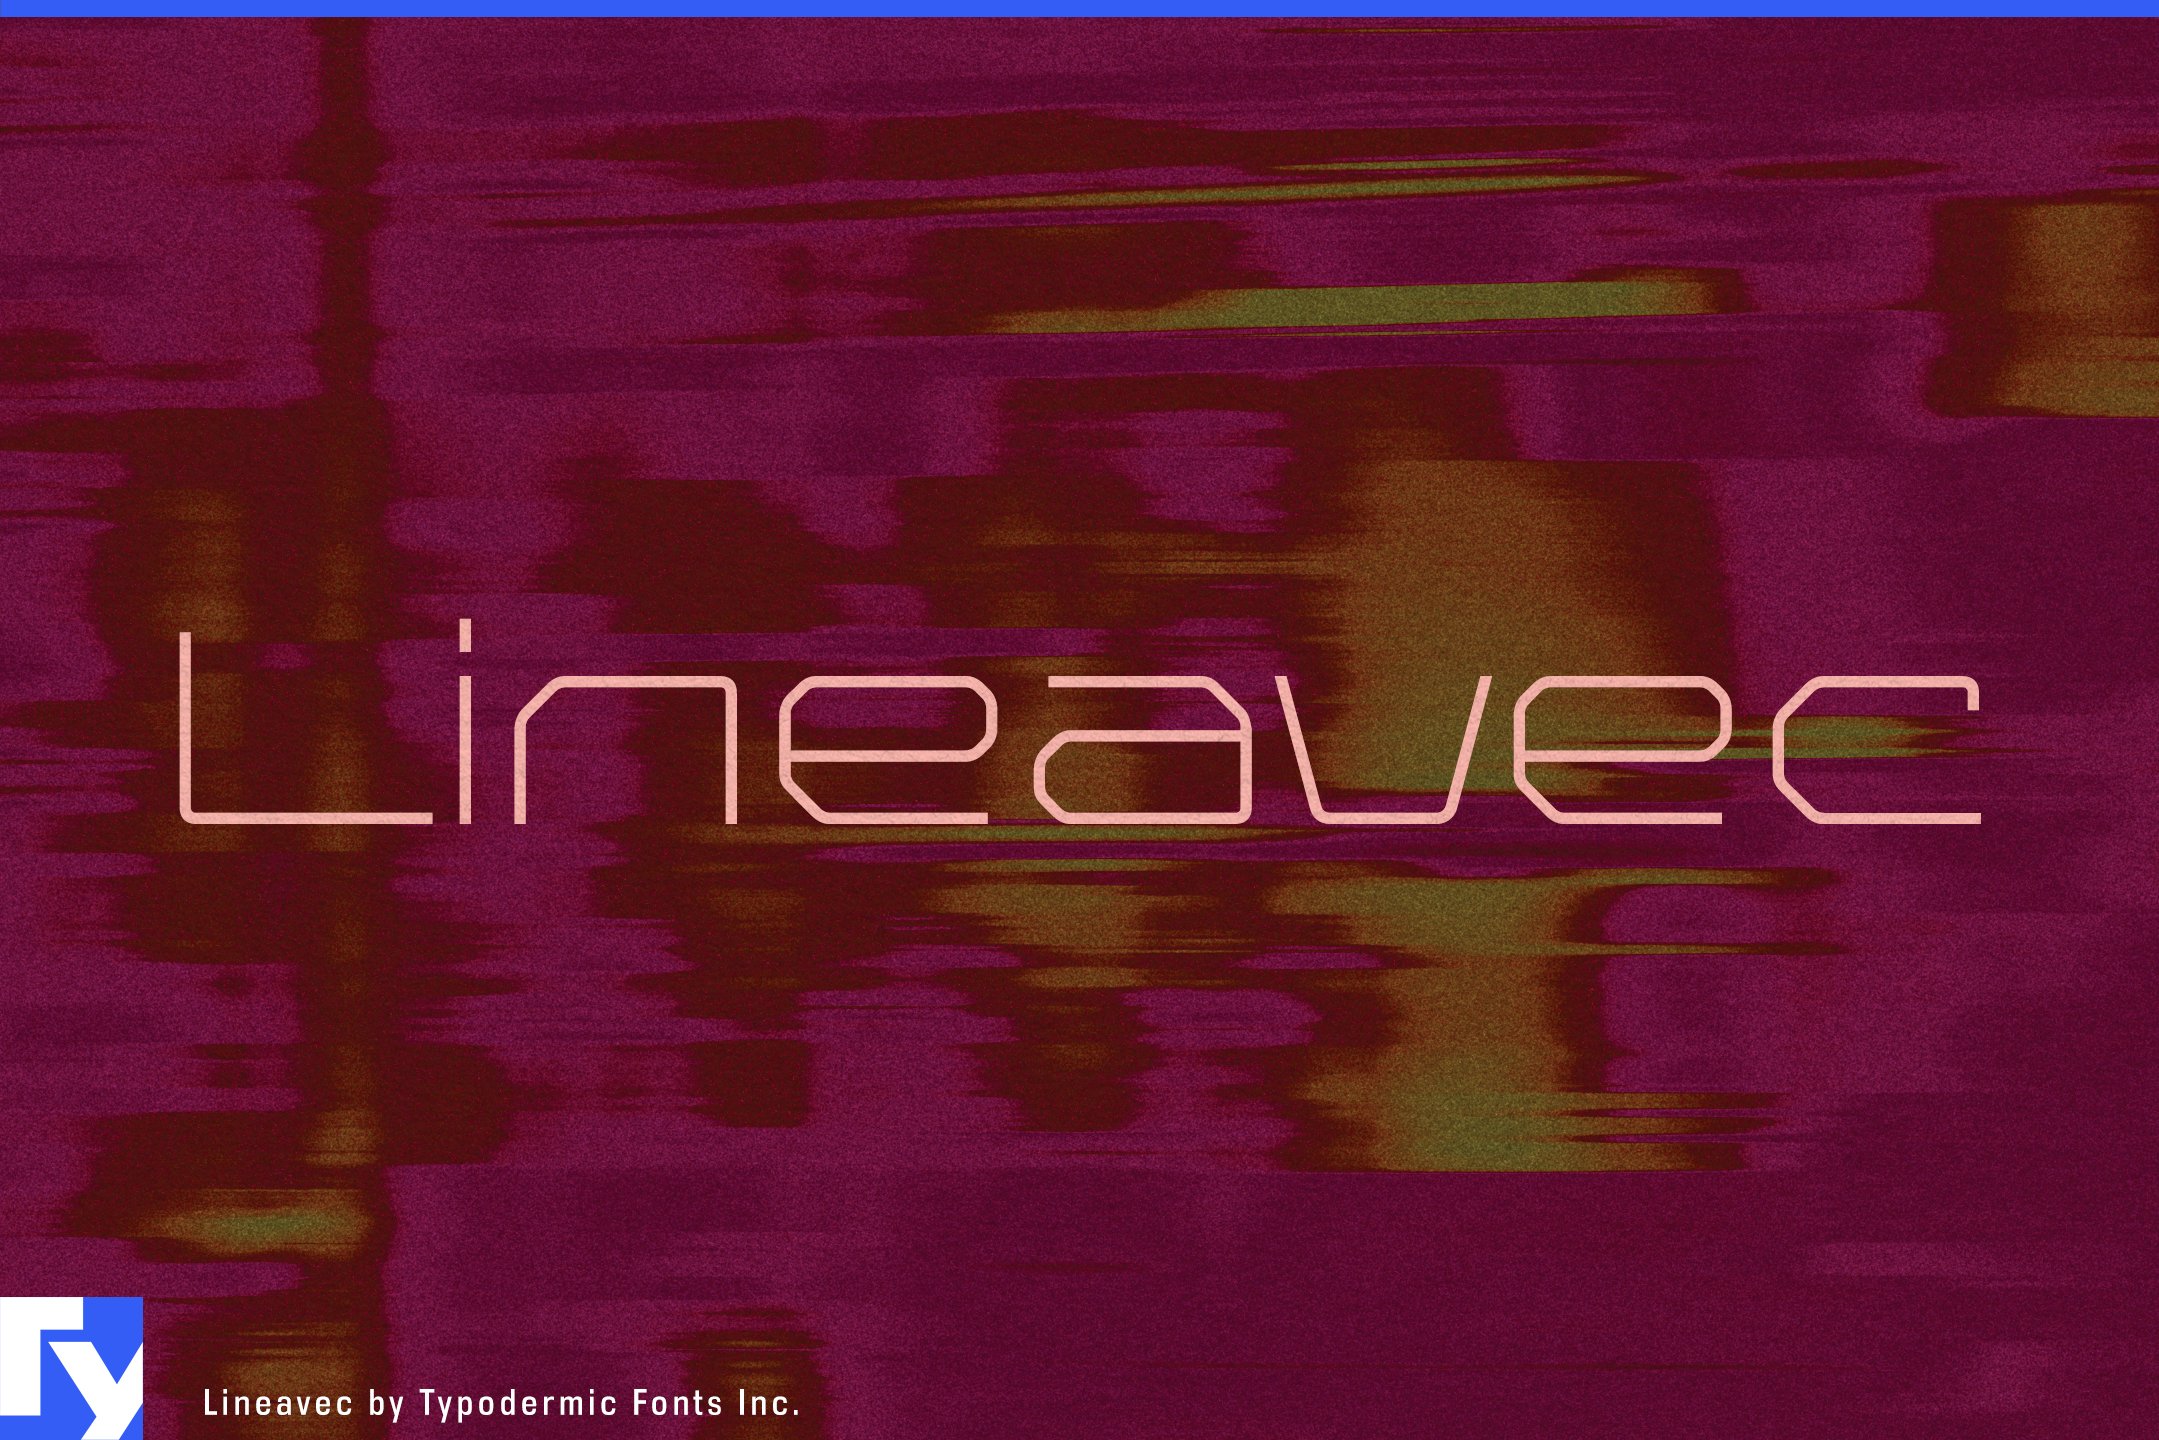 Lineavec cover image.